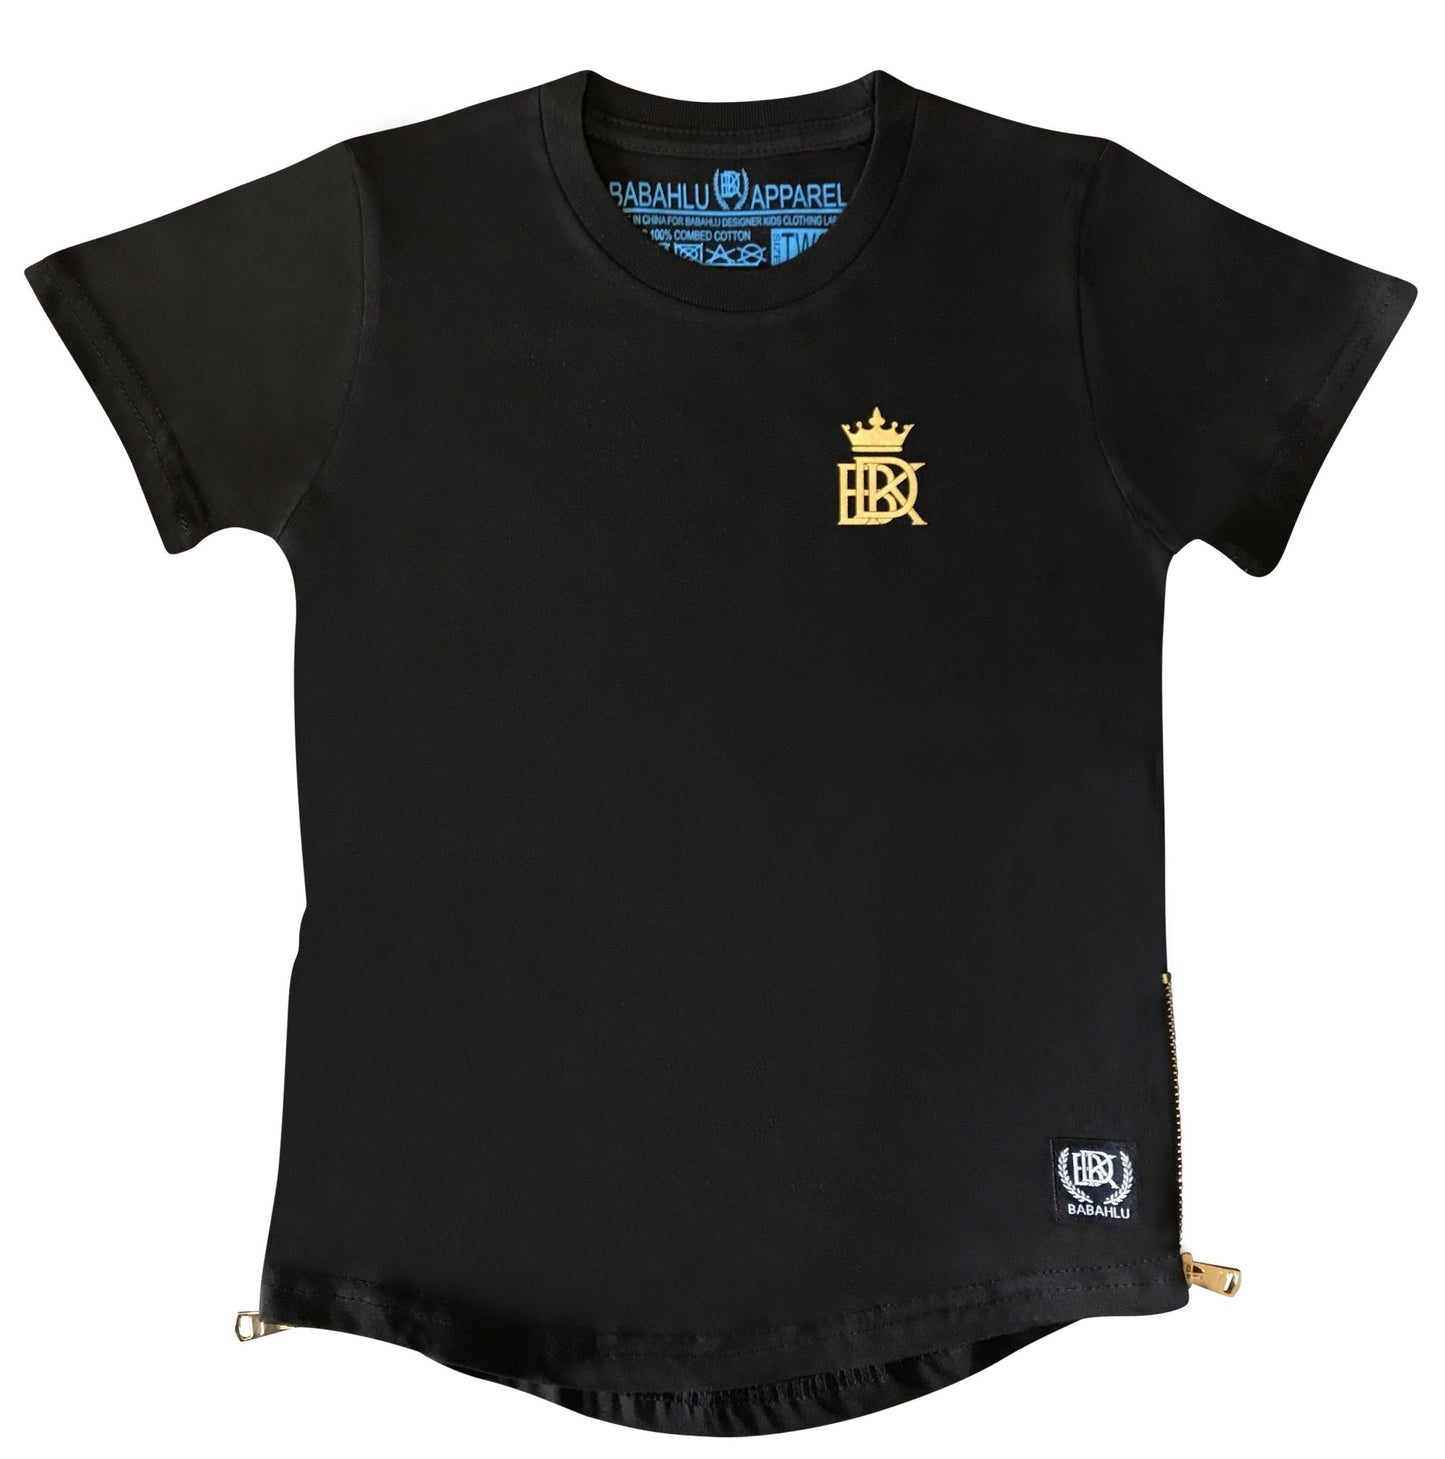 Gold Zipper Black T Shirt - Babahlu Kids